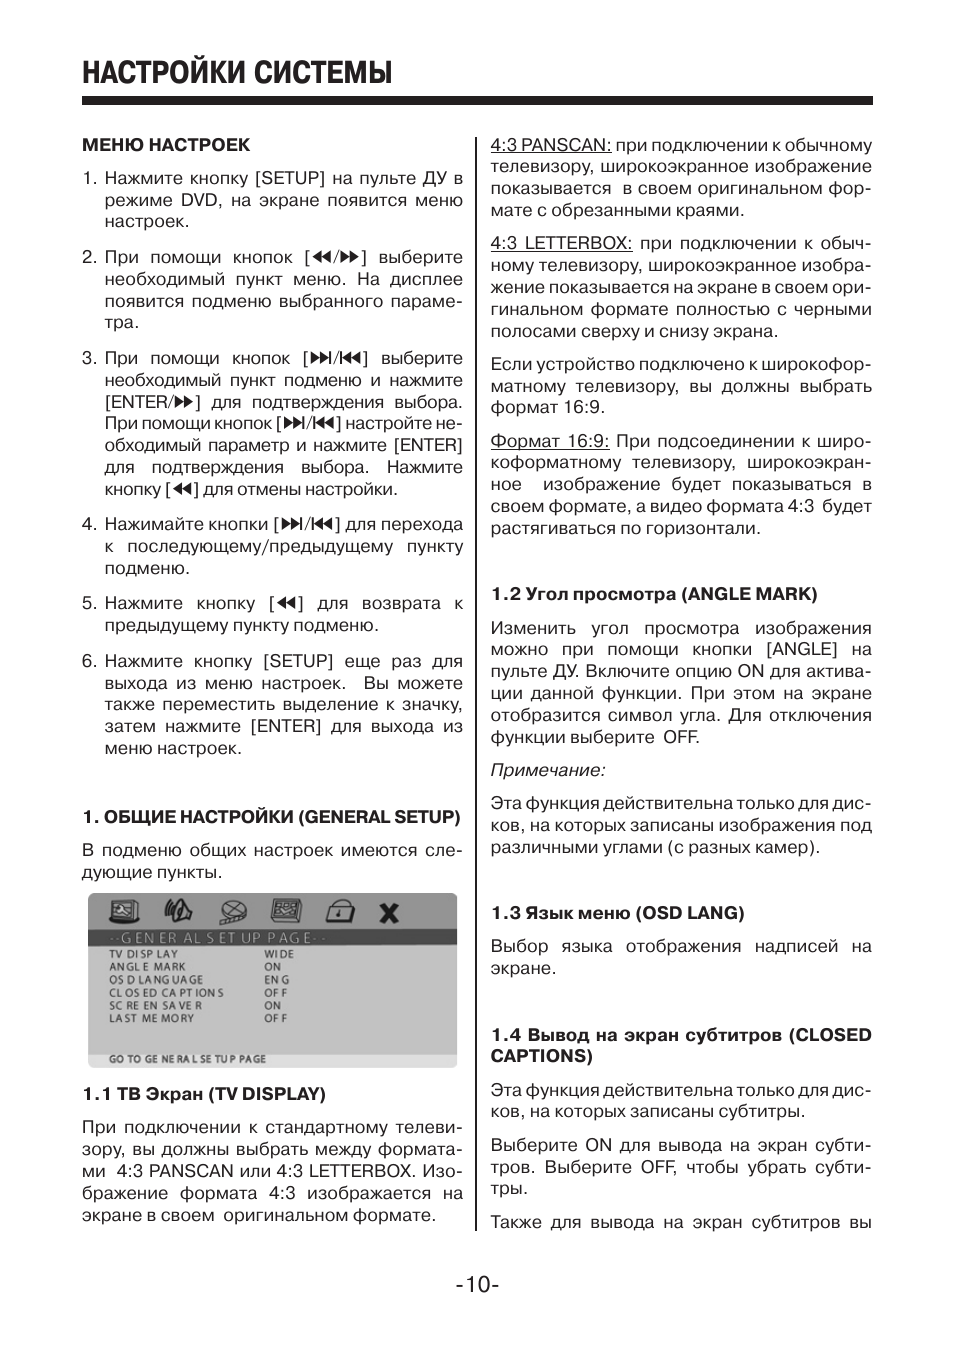 Soundstream vm 72 mps инструкция на русском